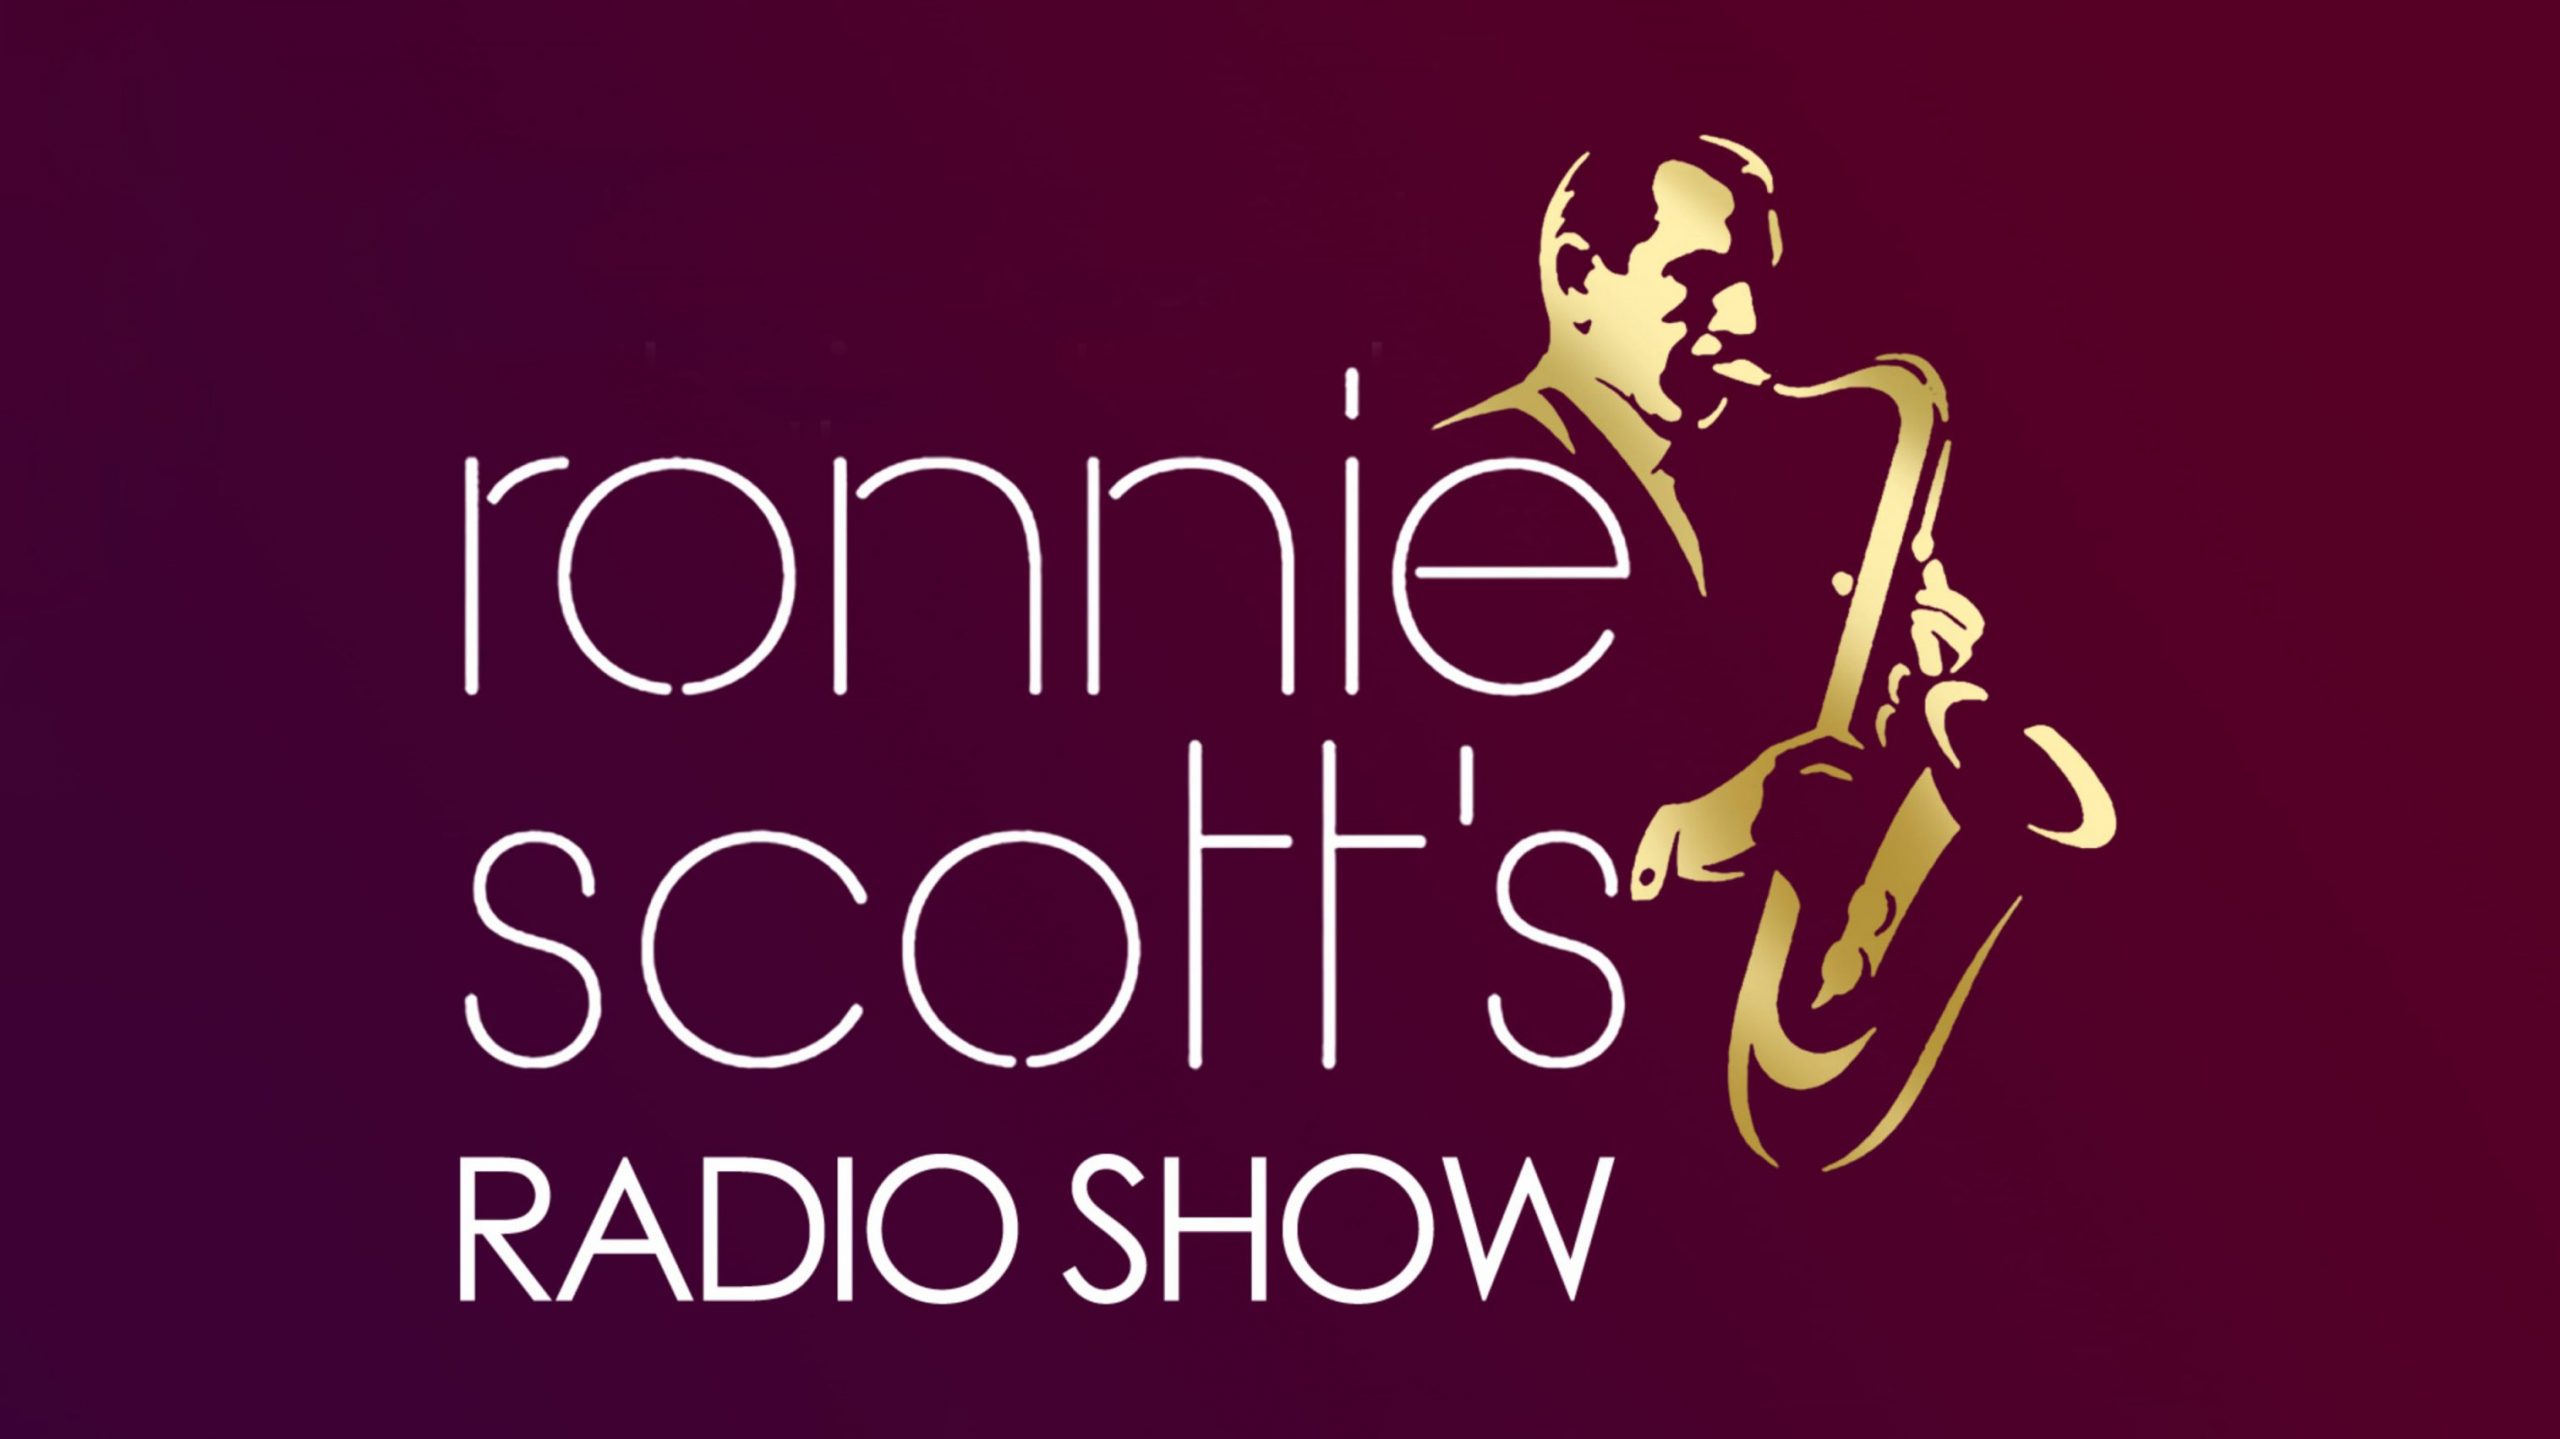 Ronnie Scott's Radio Show